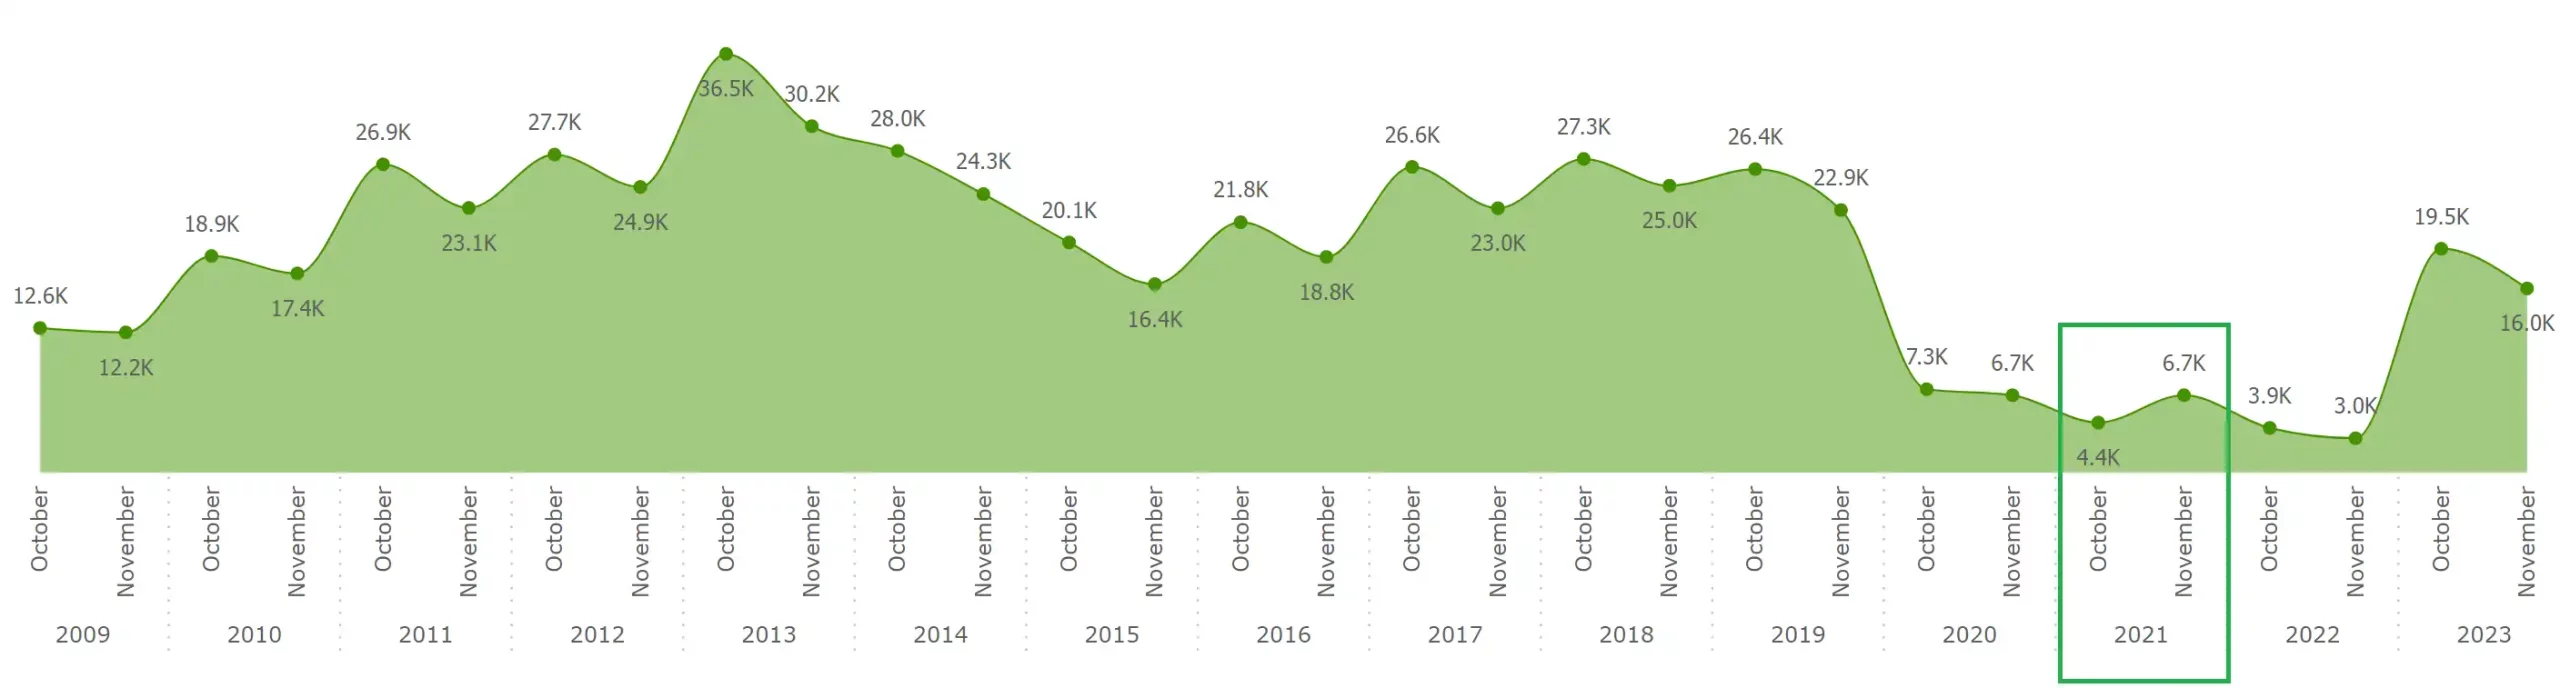 Macau Gross Gaming revenue October-November over the years